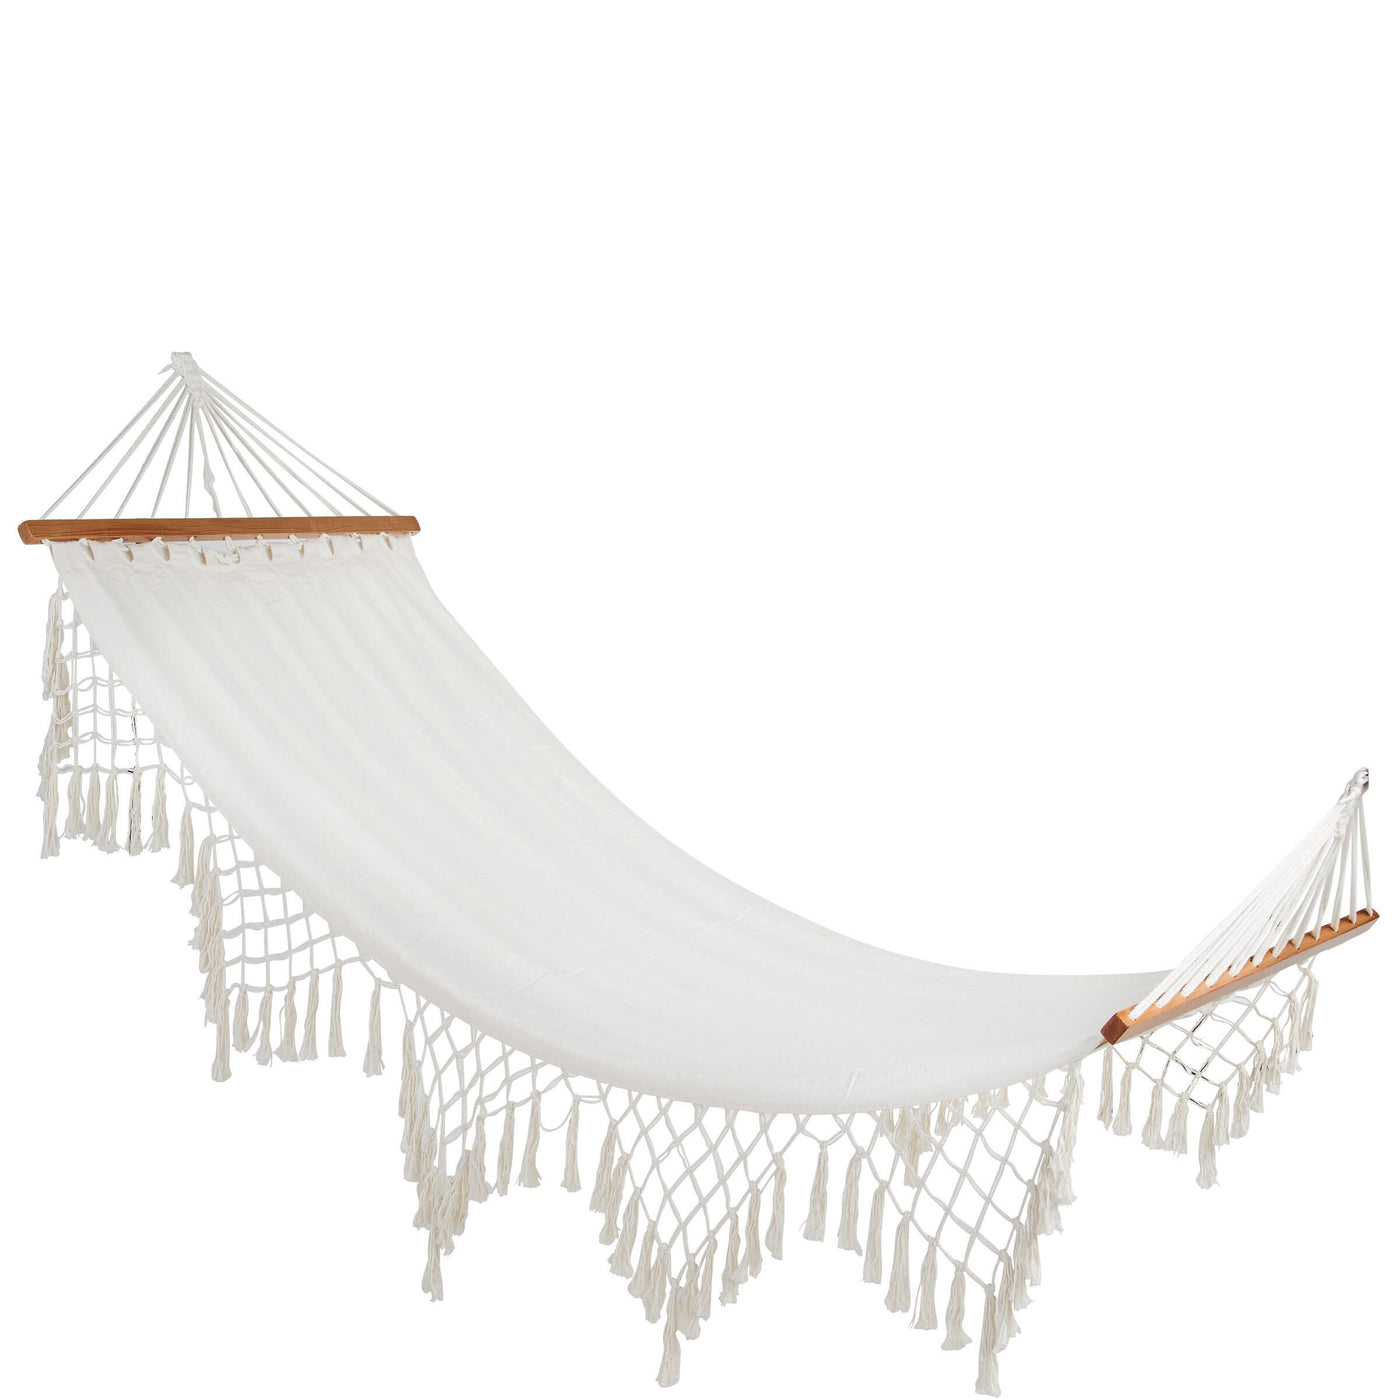 SHOW ME HEAVEN hammock with tassels